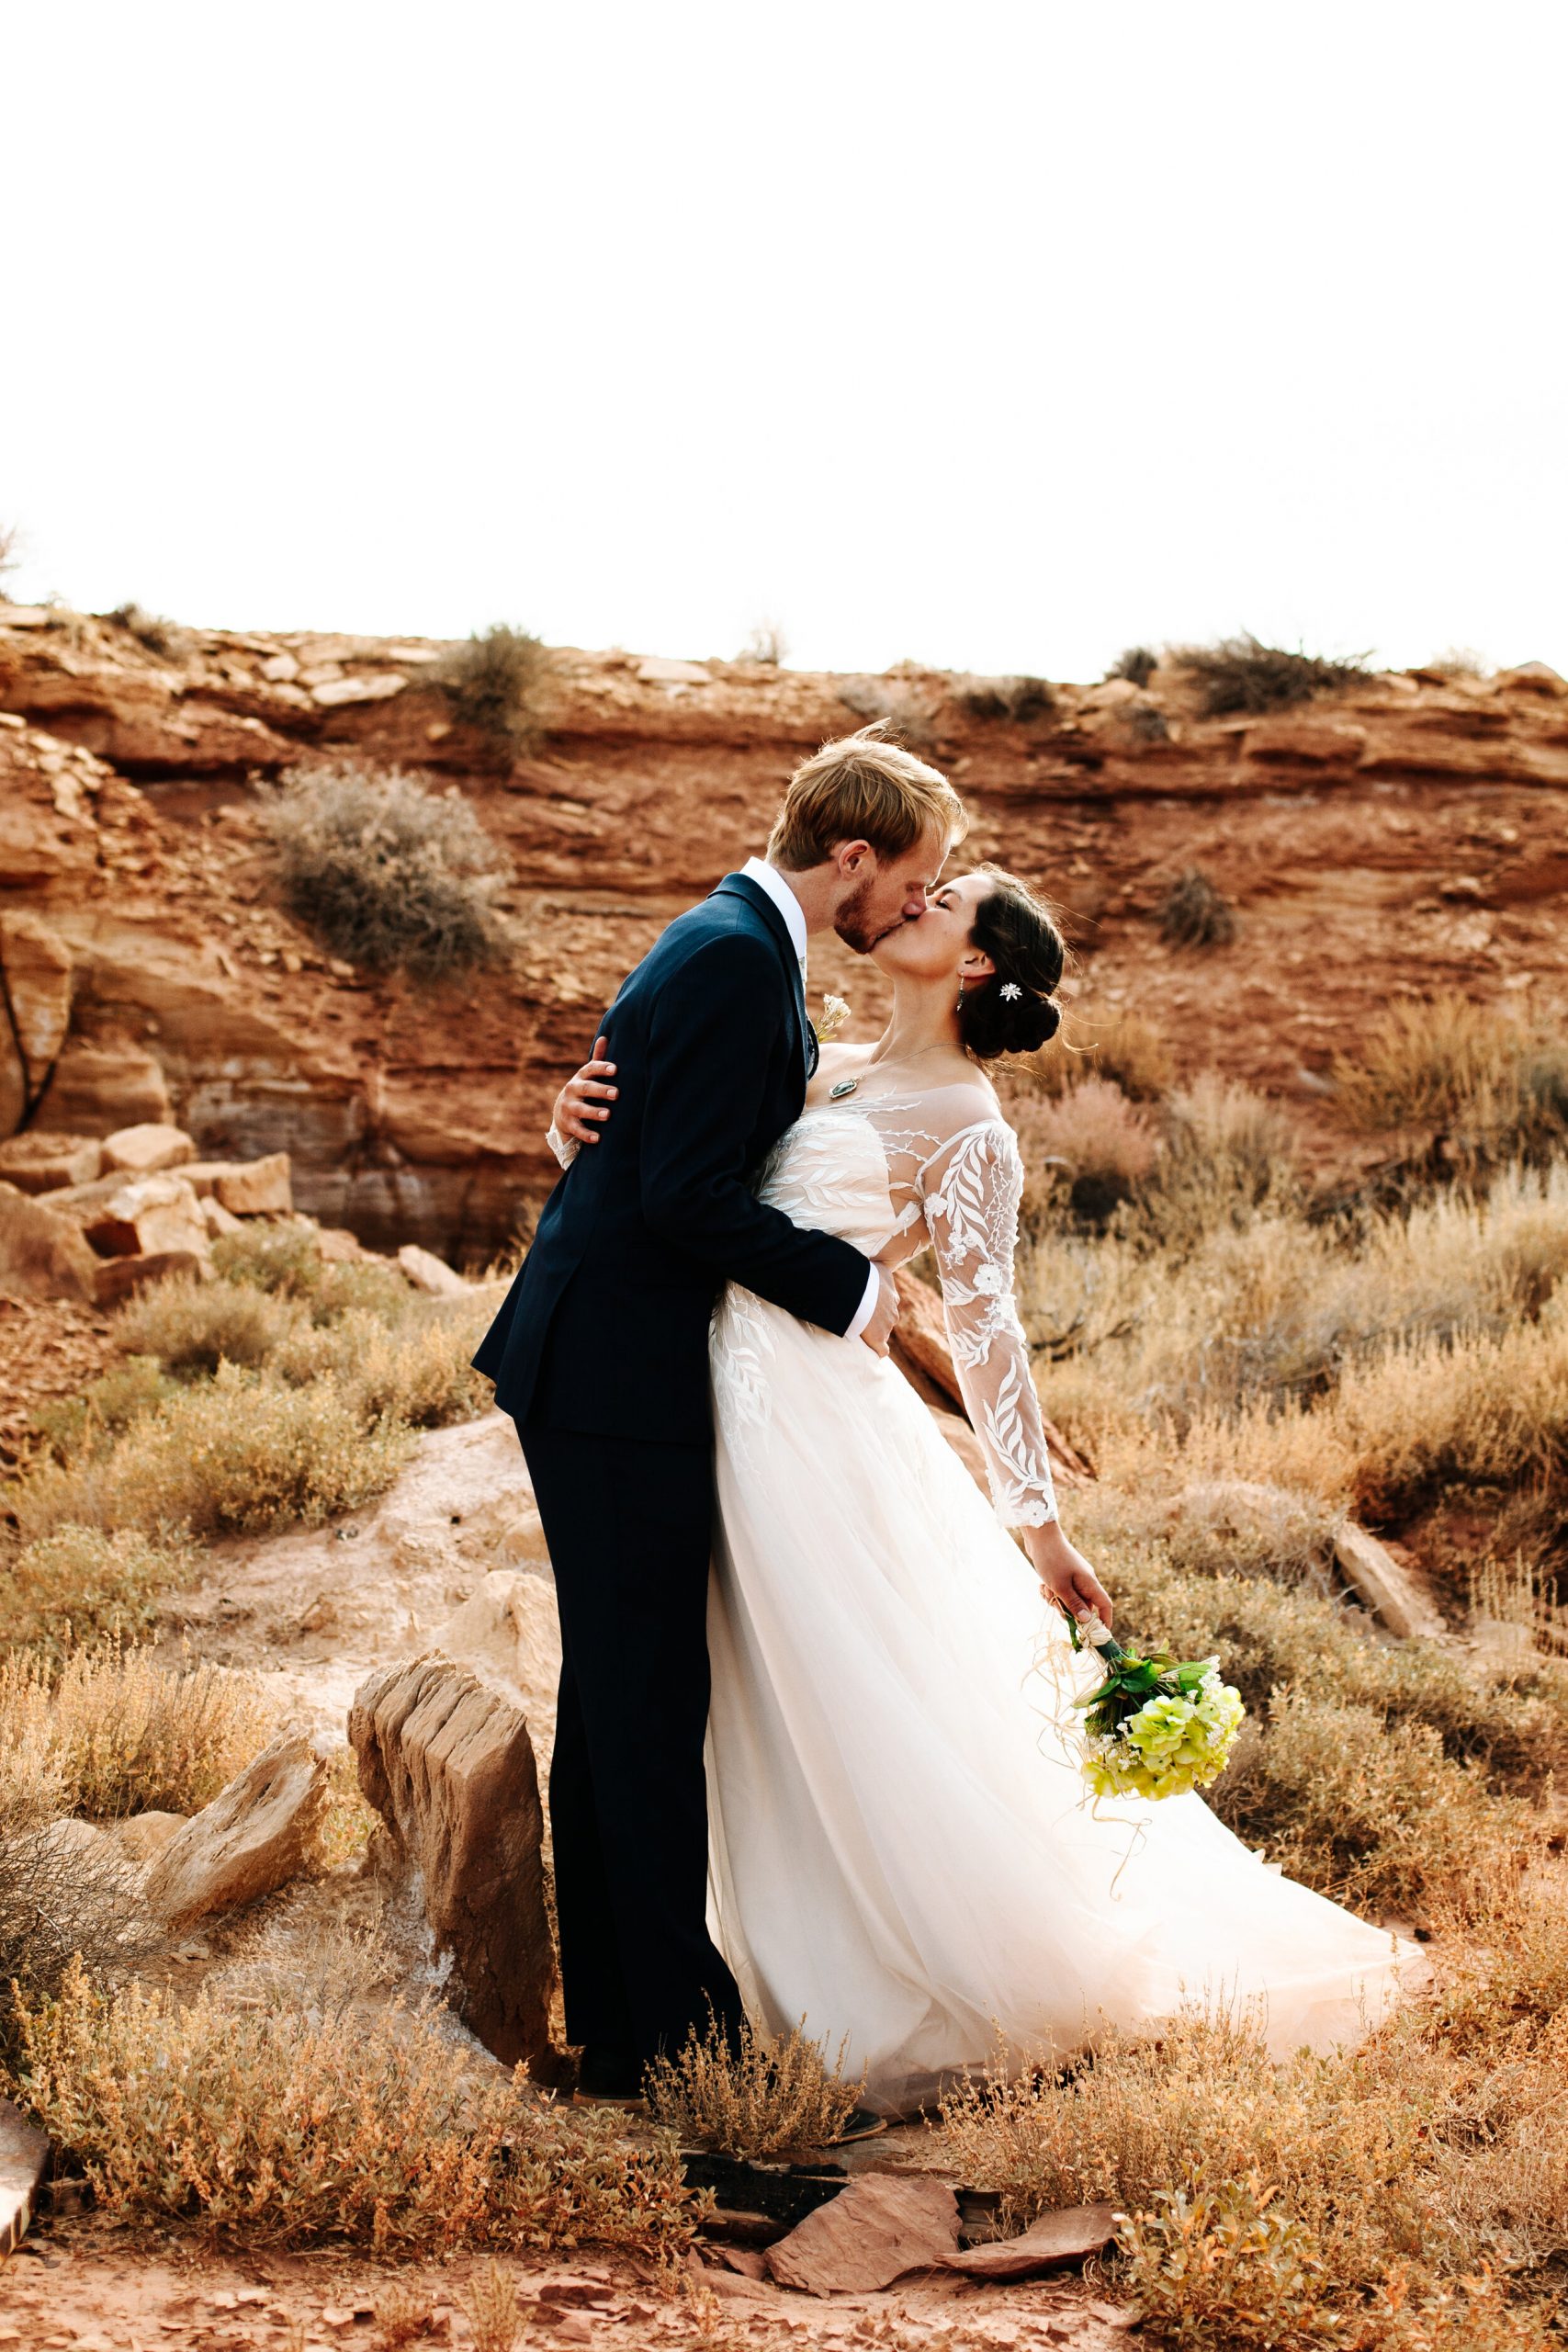 Couple kissing at their desert wedding in Moab, Utah.